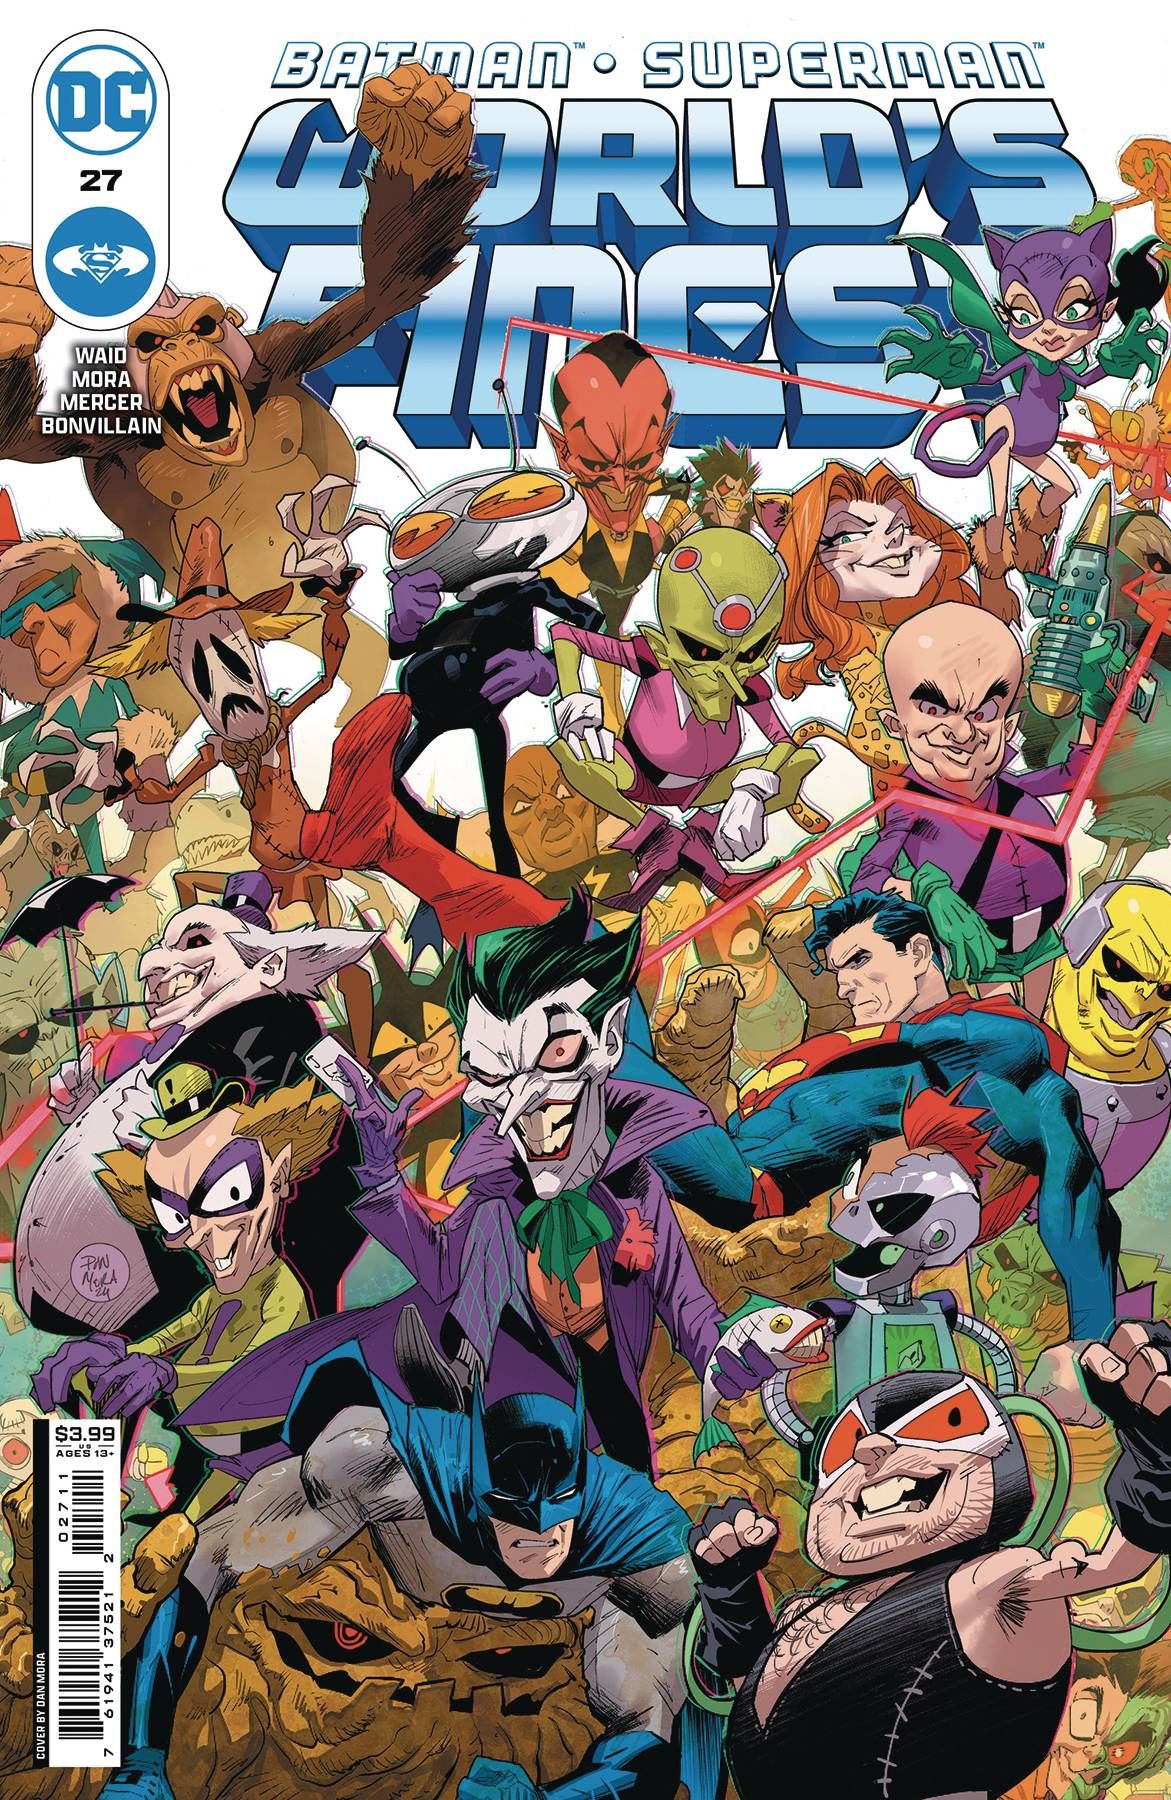 Batman Superman World's Finest 27 Main Cover: chibi versions of DC's super villains fight Batman and Superman.